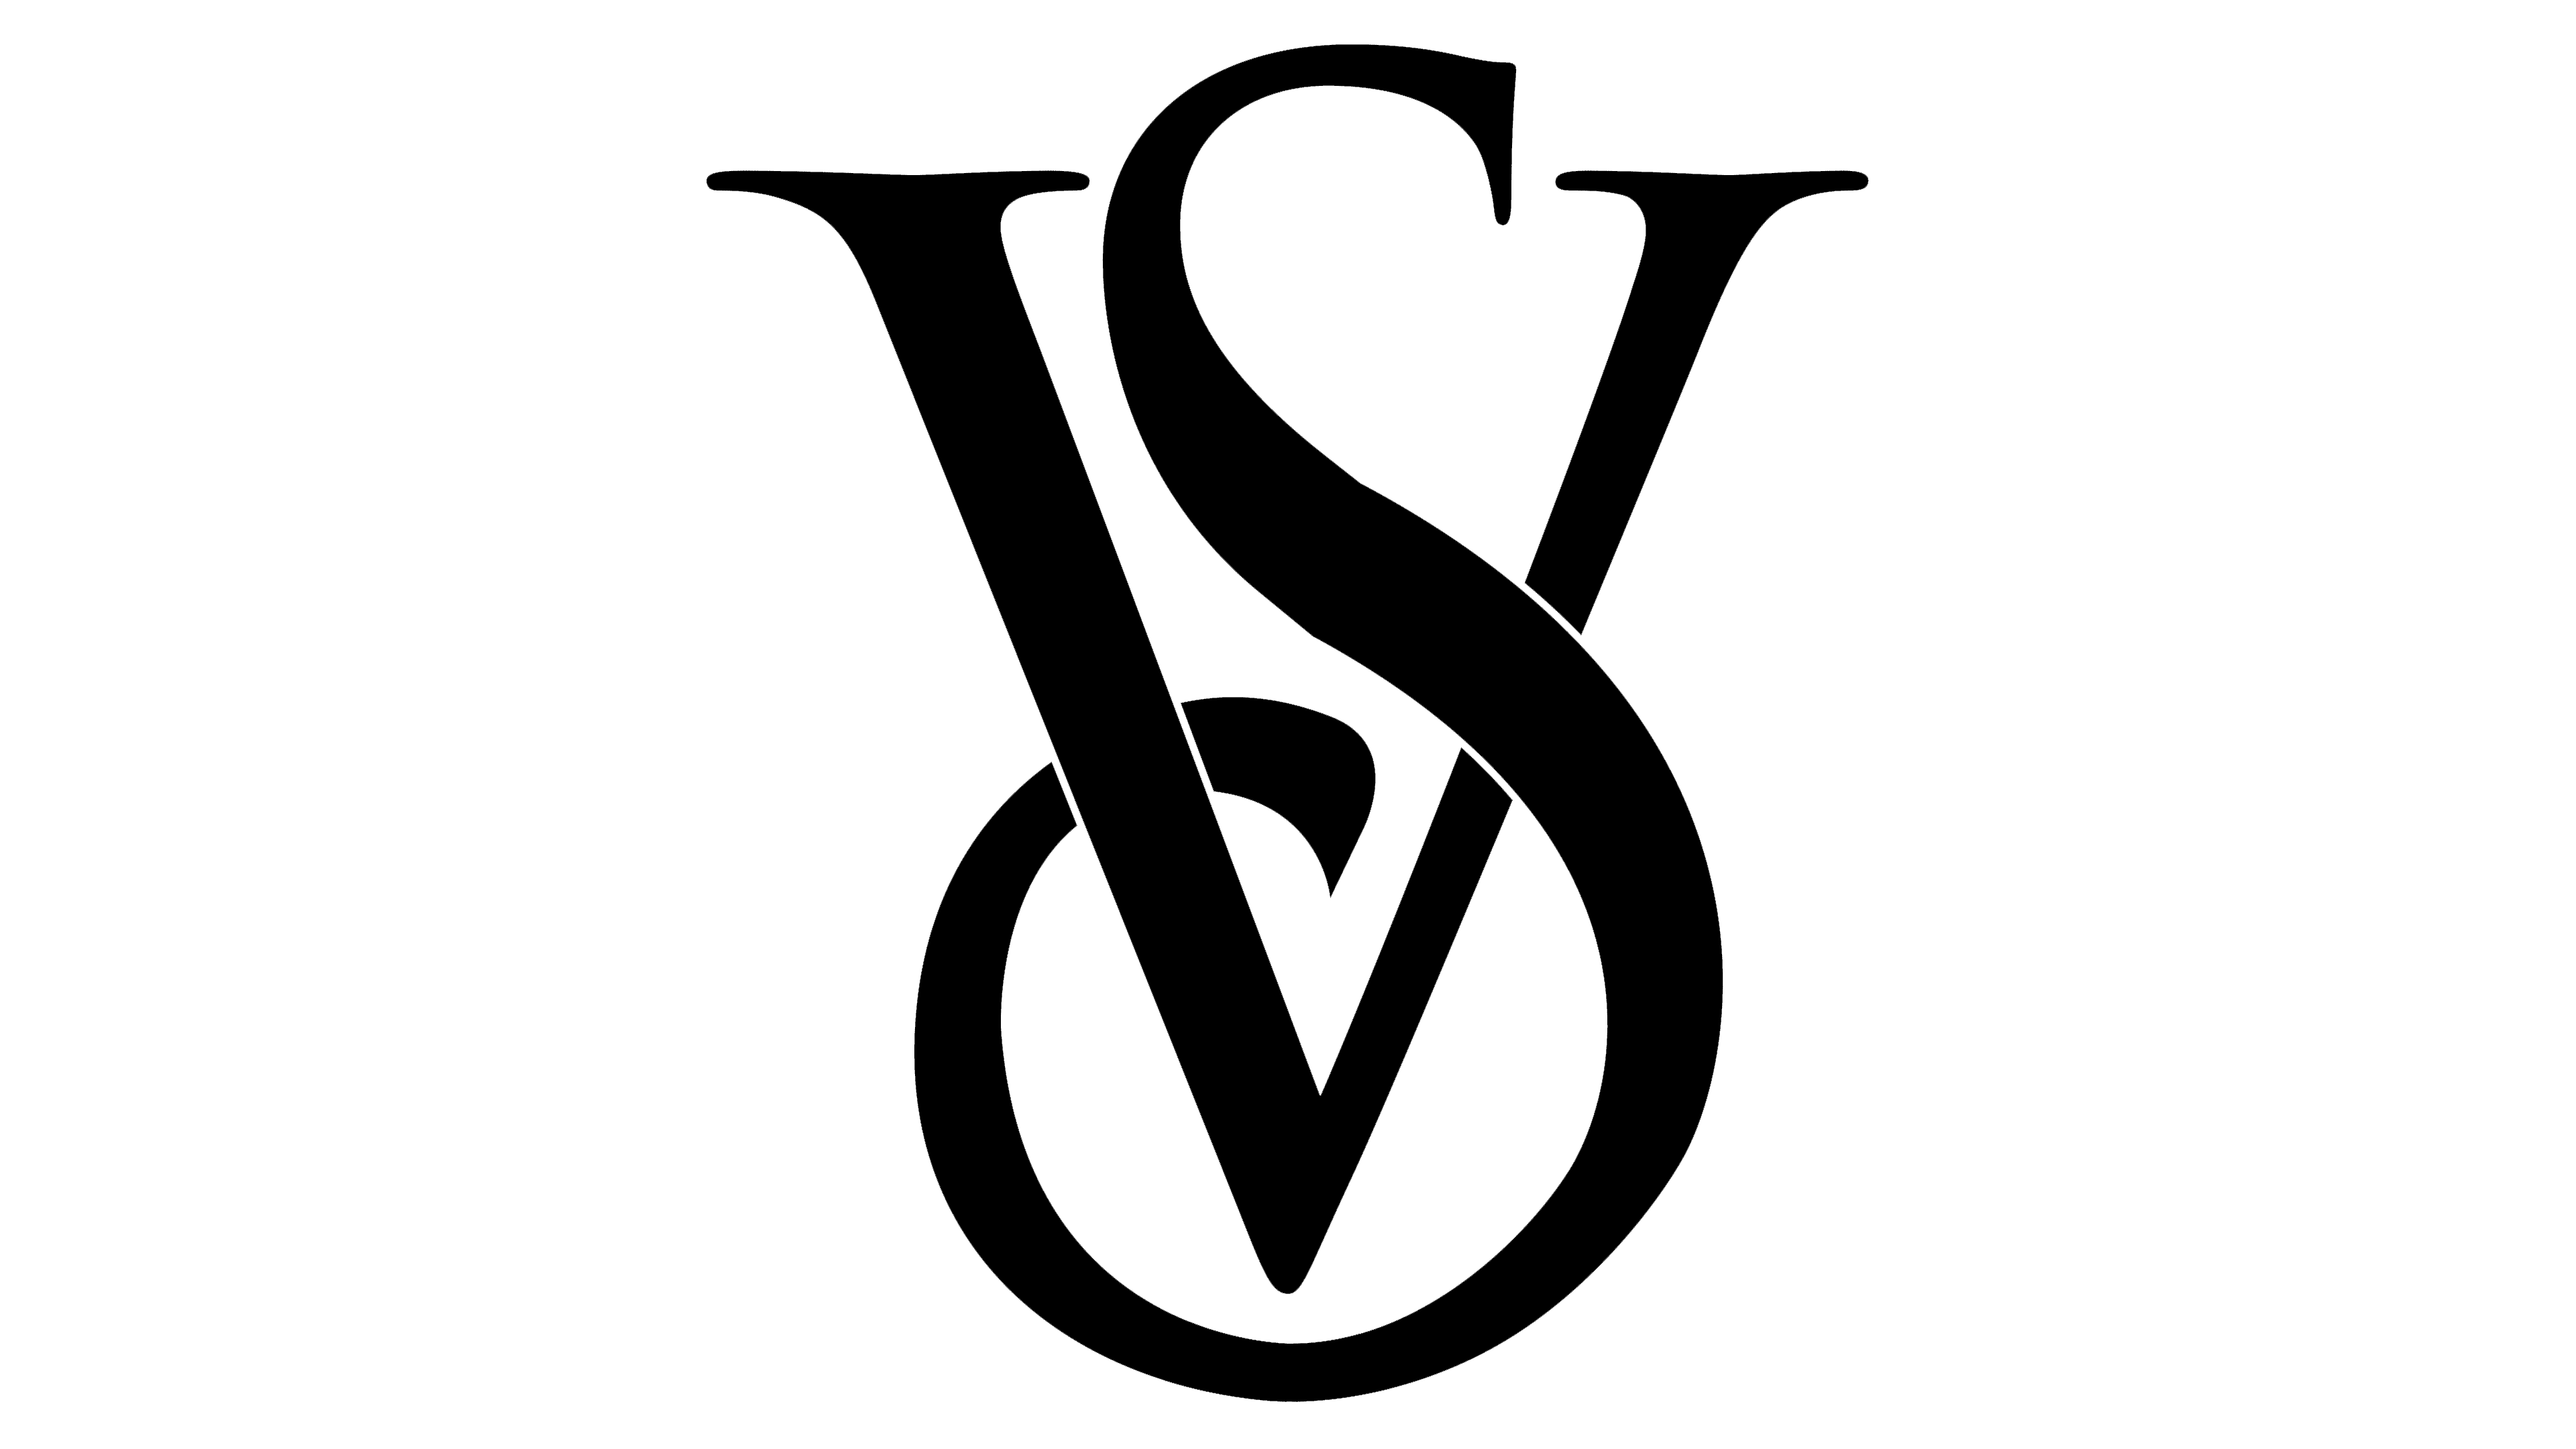 Victoria's Secret Logo, symbol, meaning, history, PNG, brand